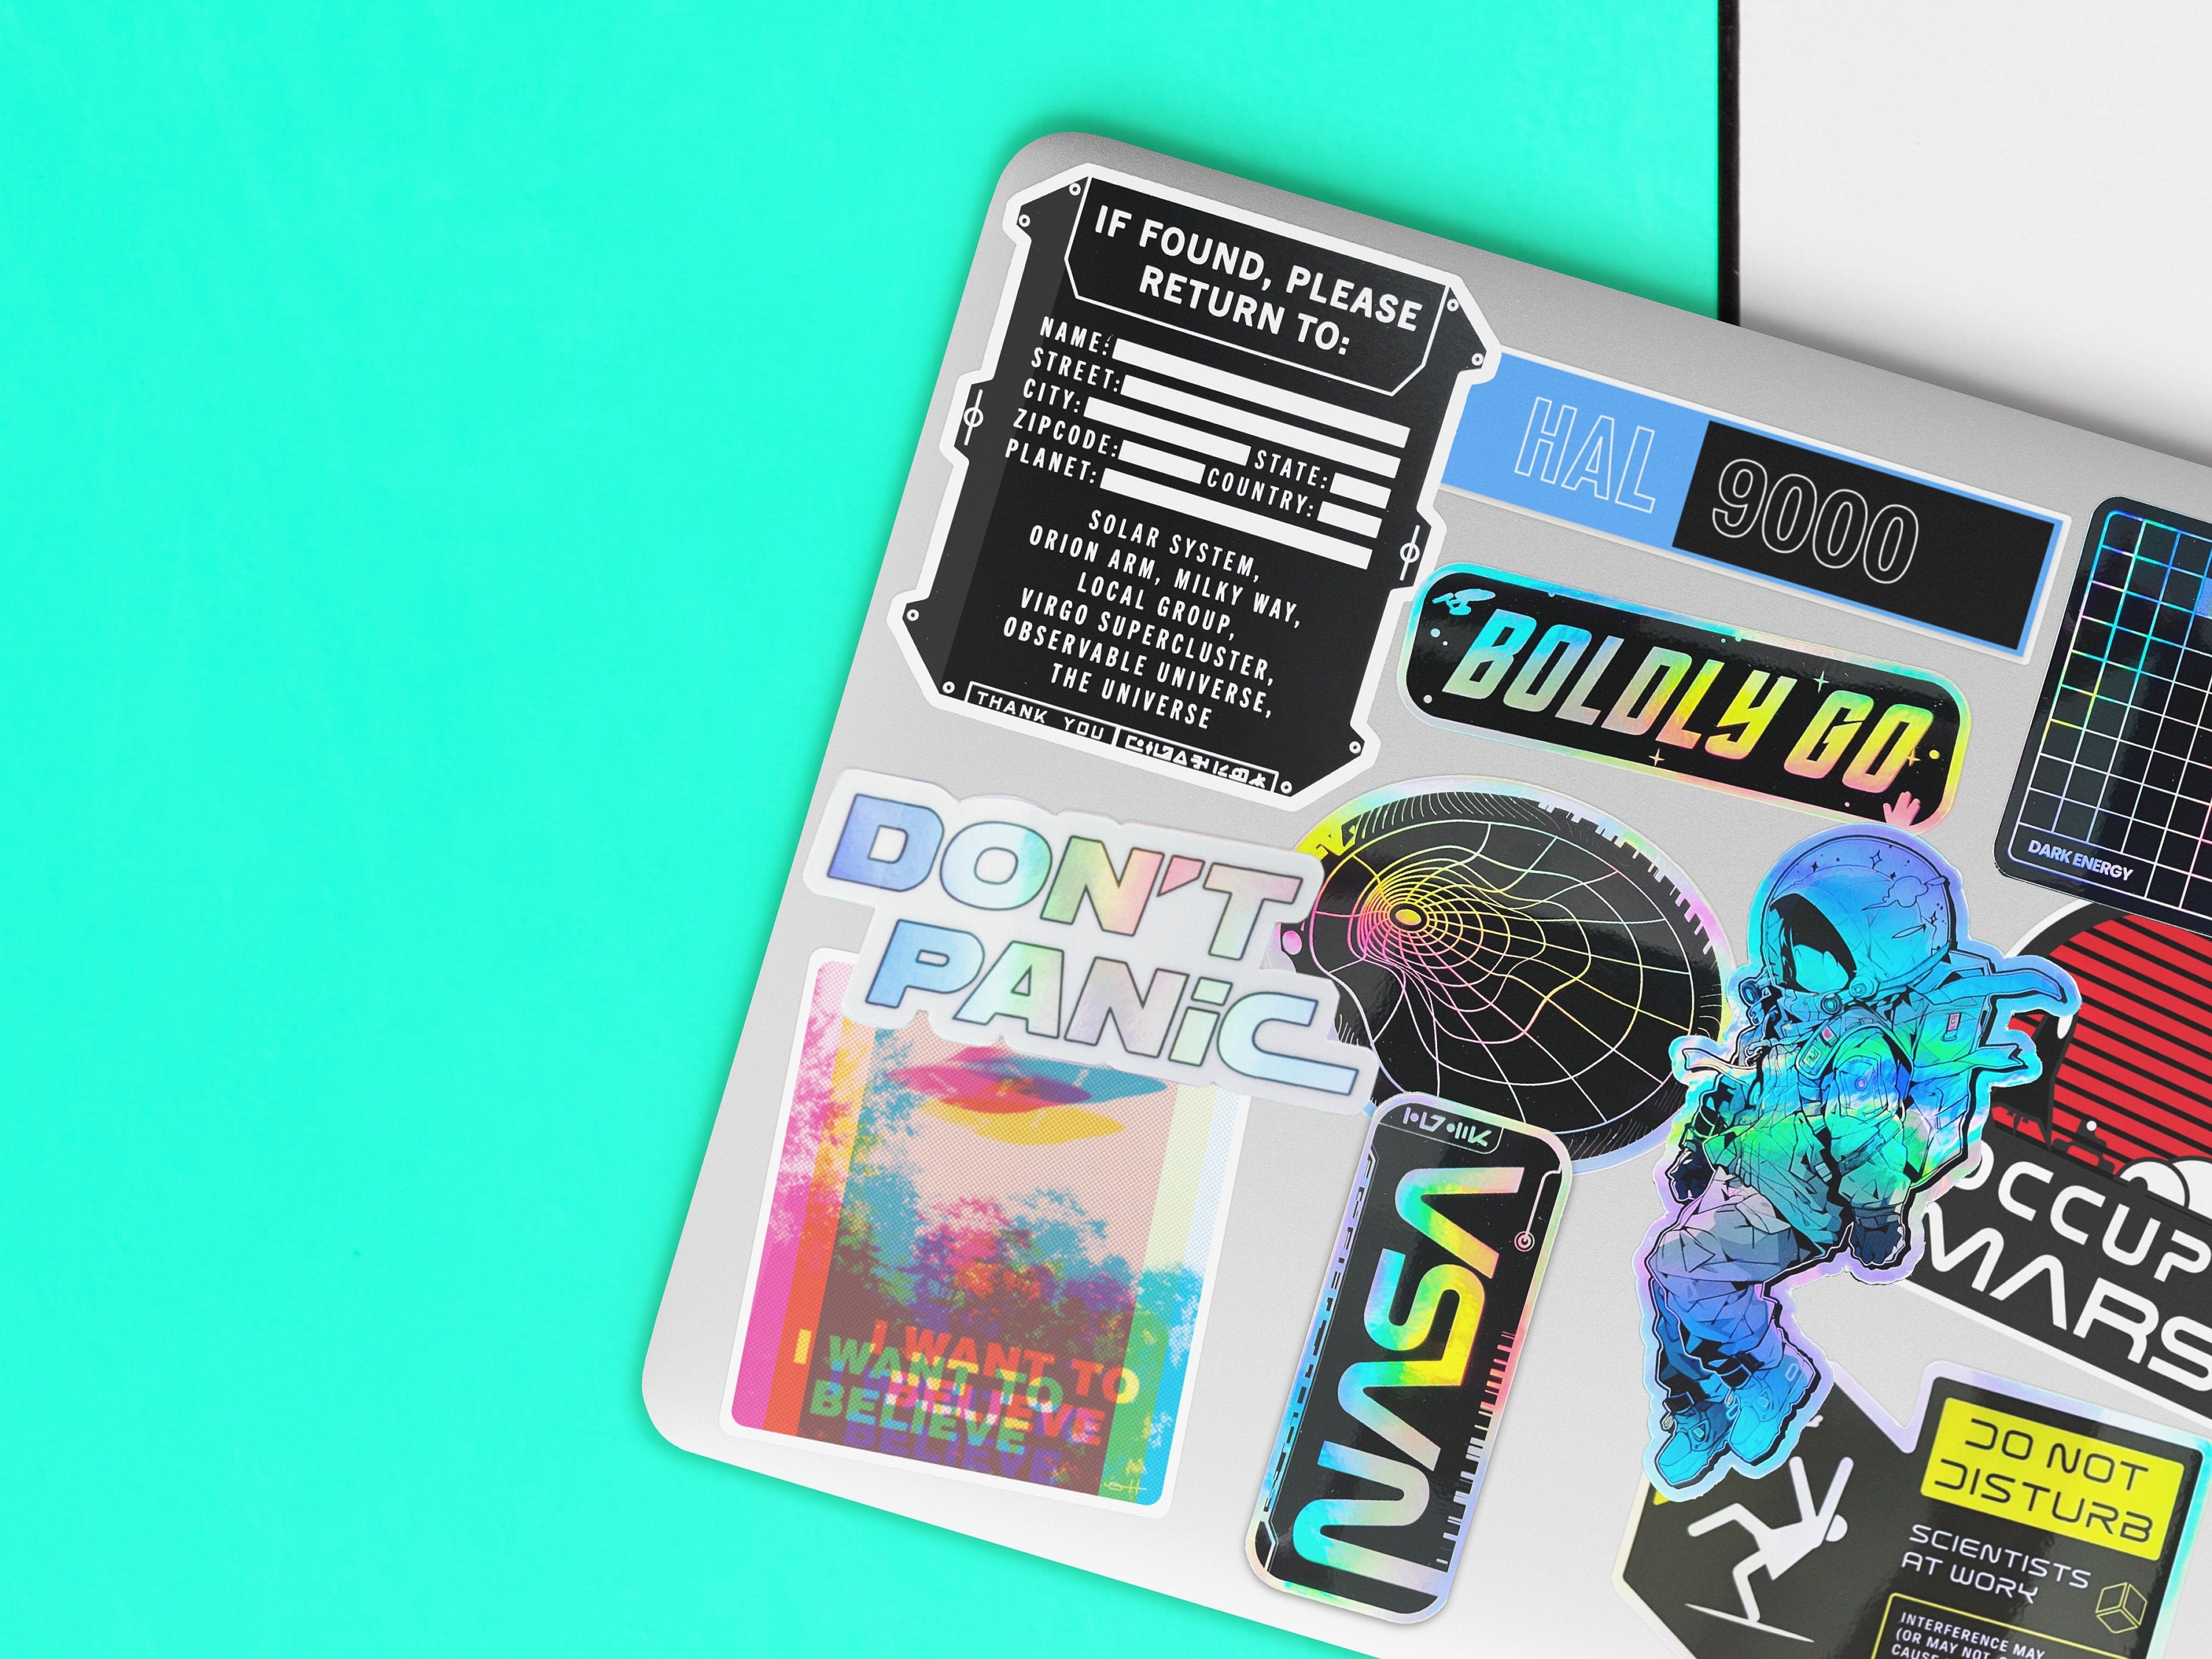 Astrogirl Cyberpunk Holographic Glitter Decal - Sci-fi Astropunk Vinyl Laptop Sticker - Futuristic Astronomy / Space Bumper Sticker